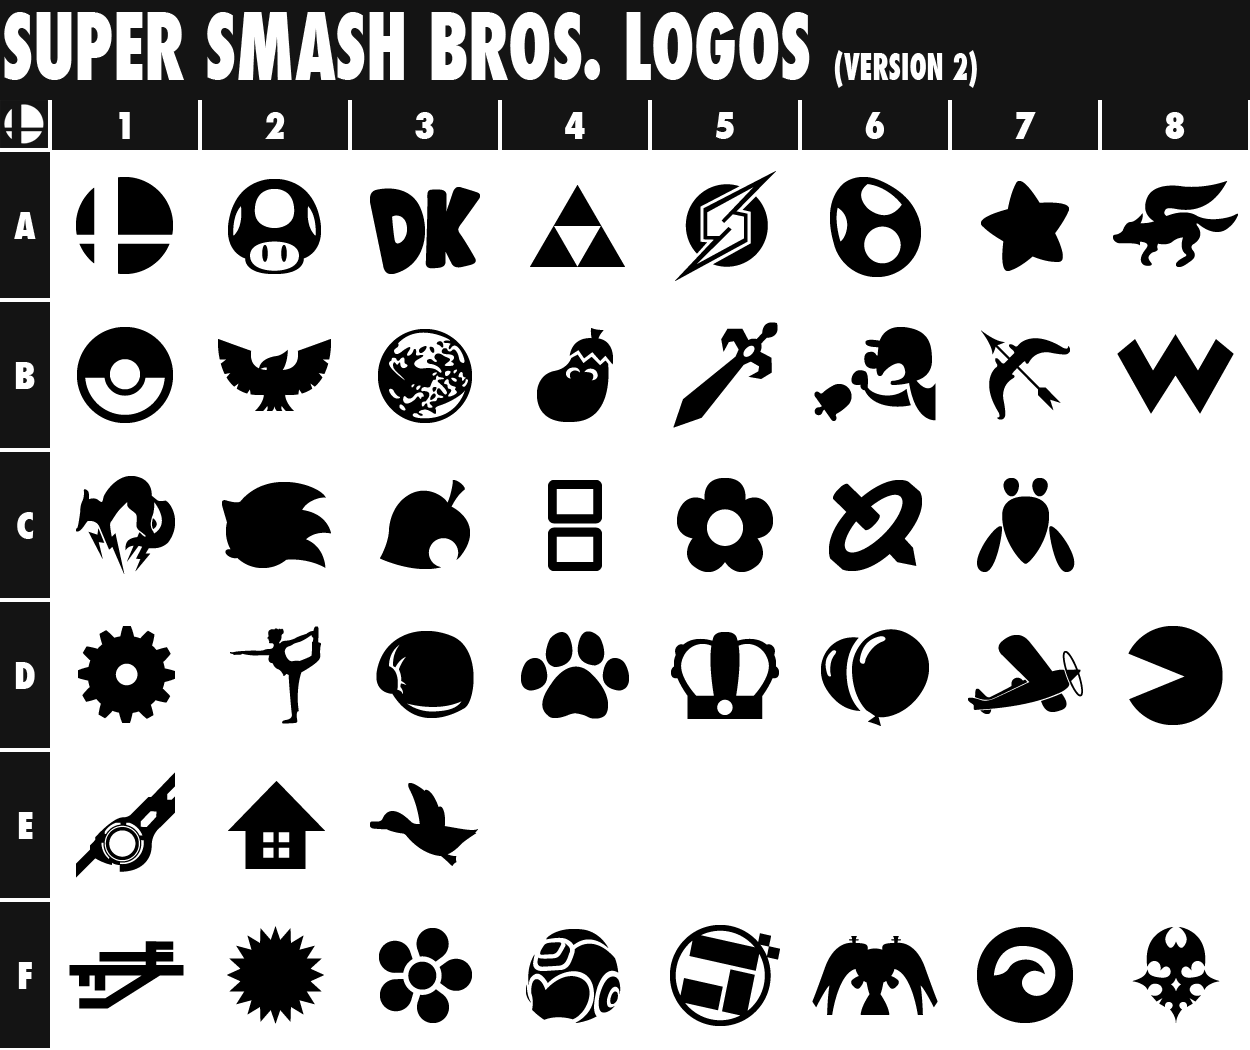 Smash Brothers Logo - Super Smash Bros. Logos (Version 2) by TriforceJ on DeviantArt